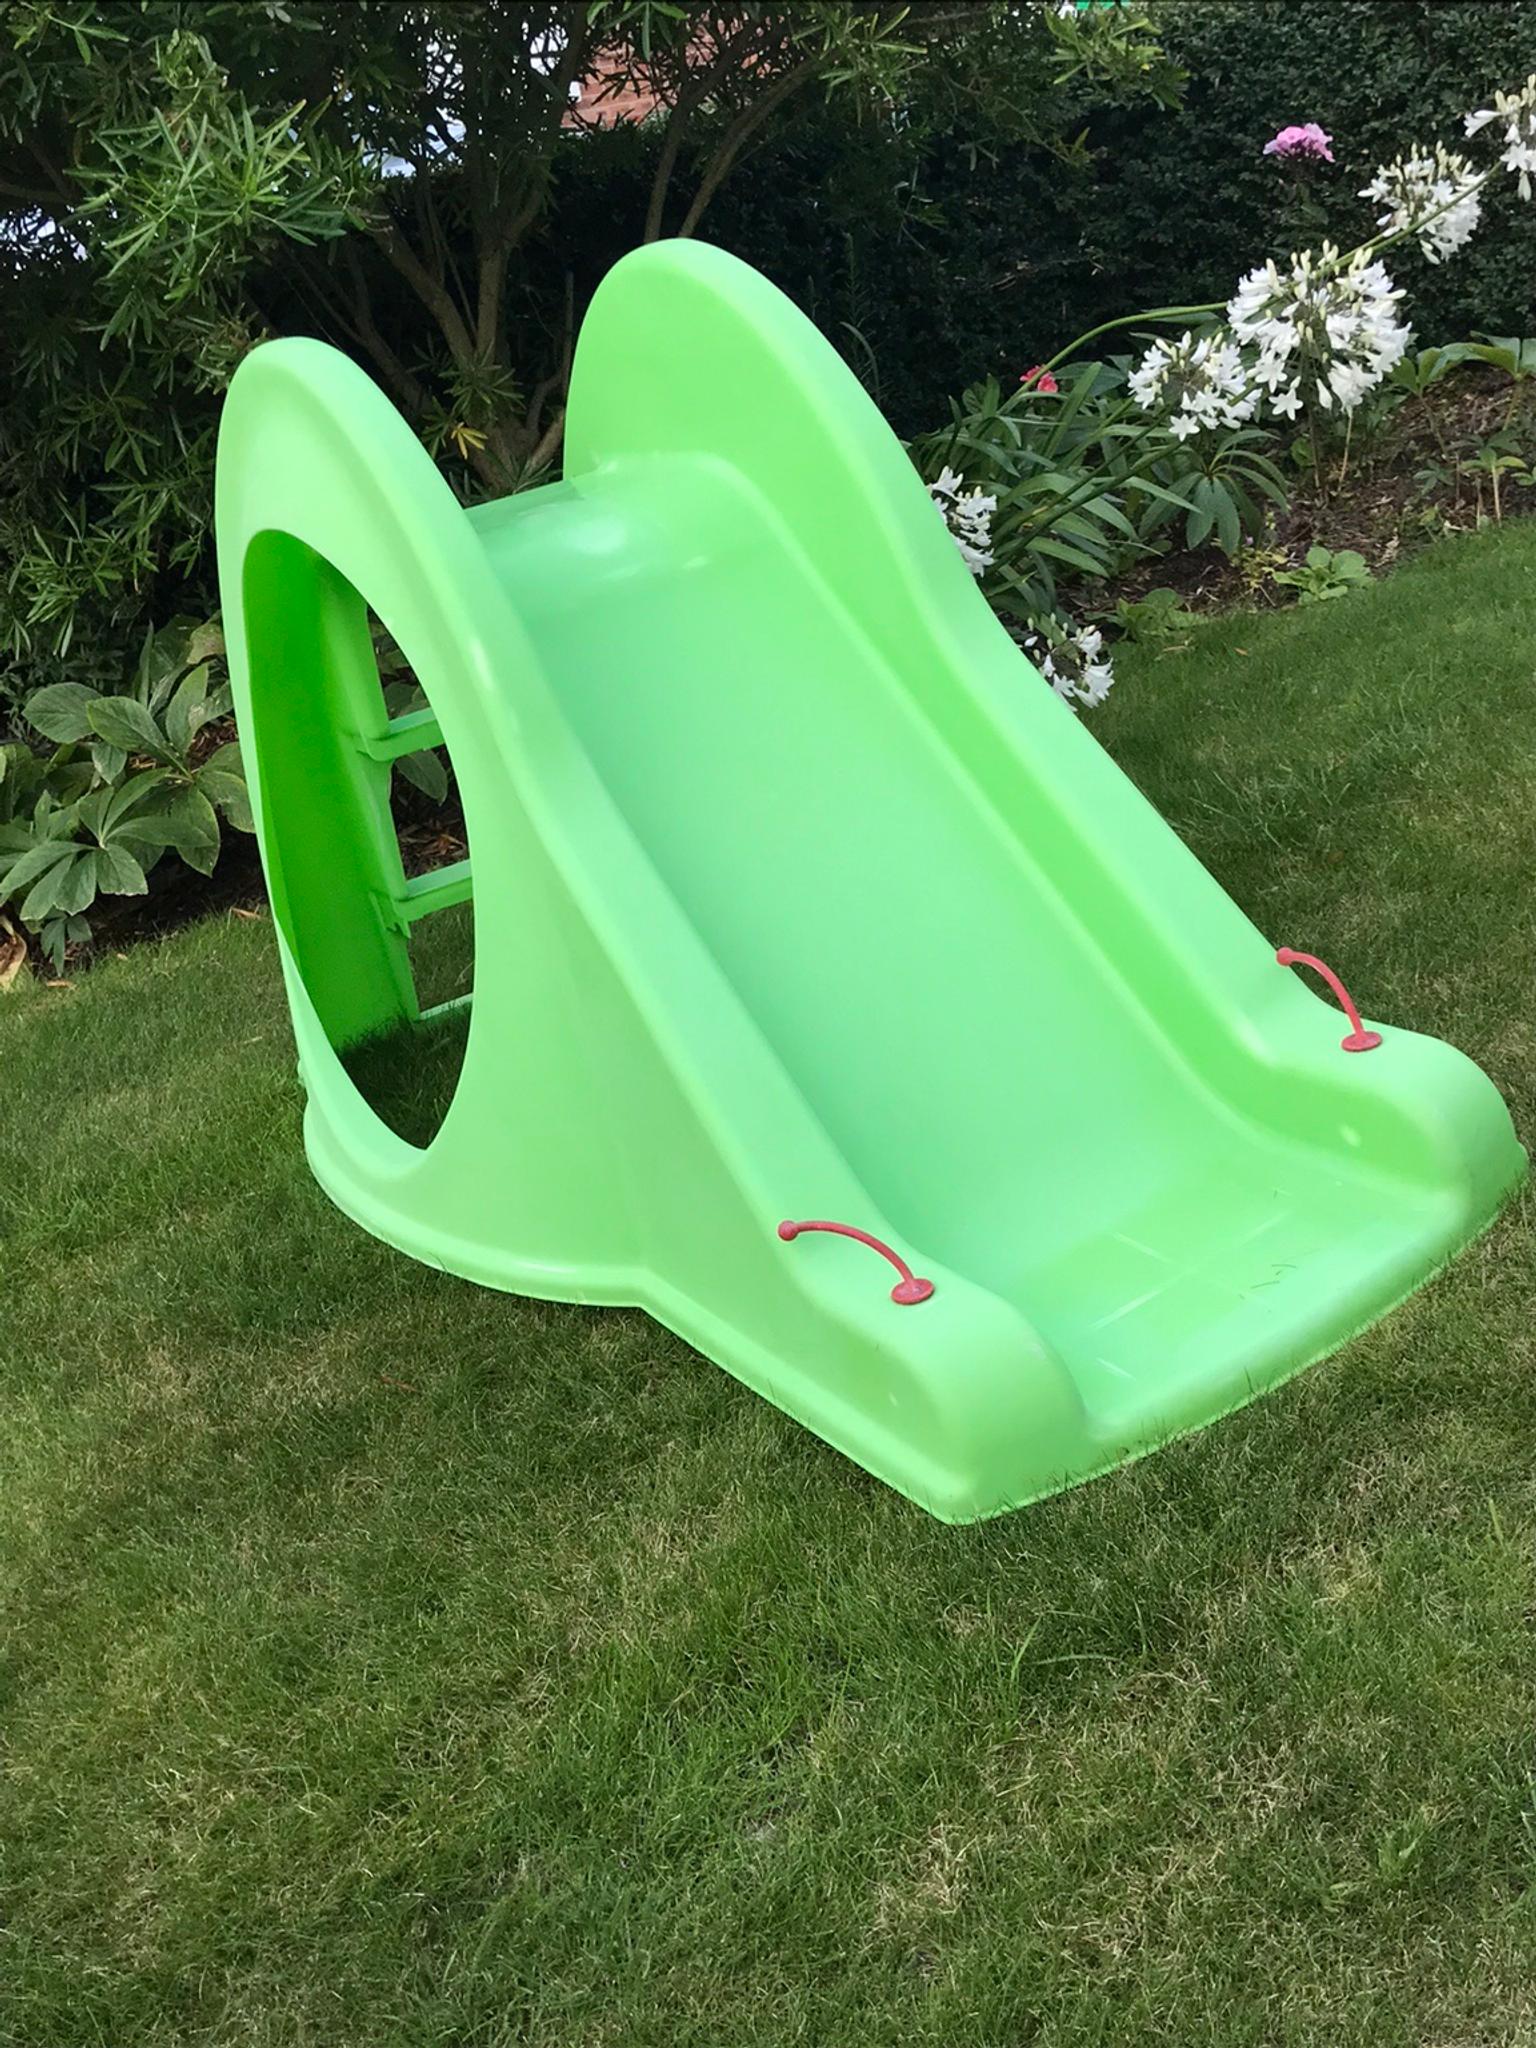 Green Chad Valley 3ft Bug Toddler Slide 